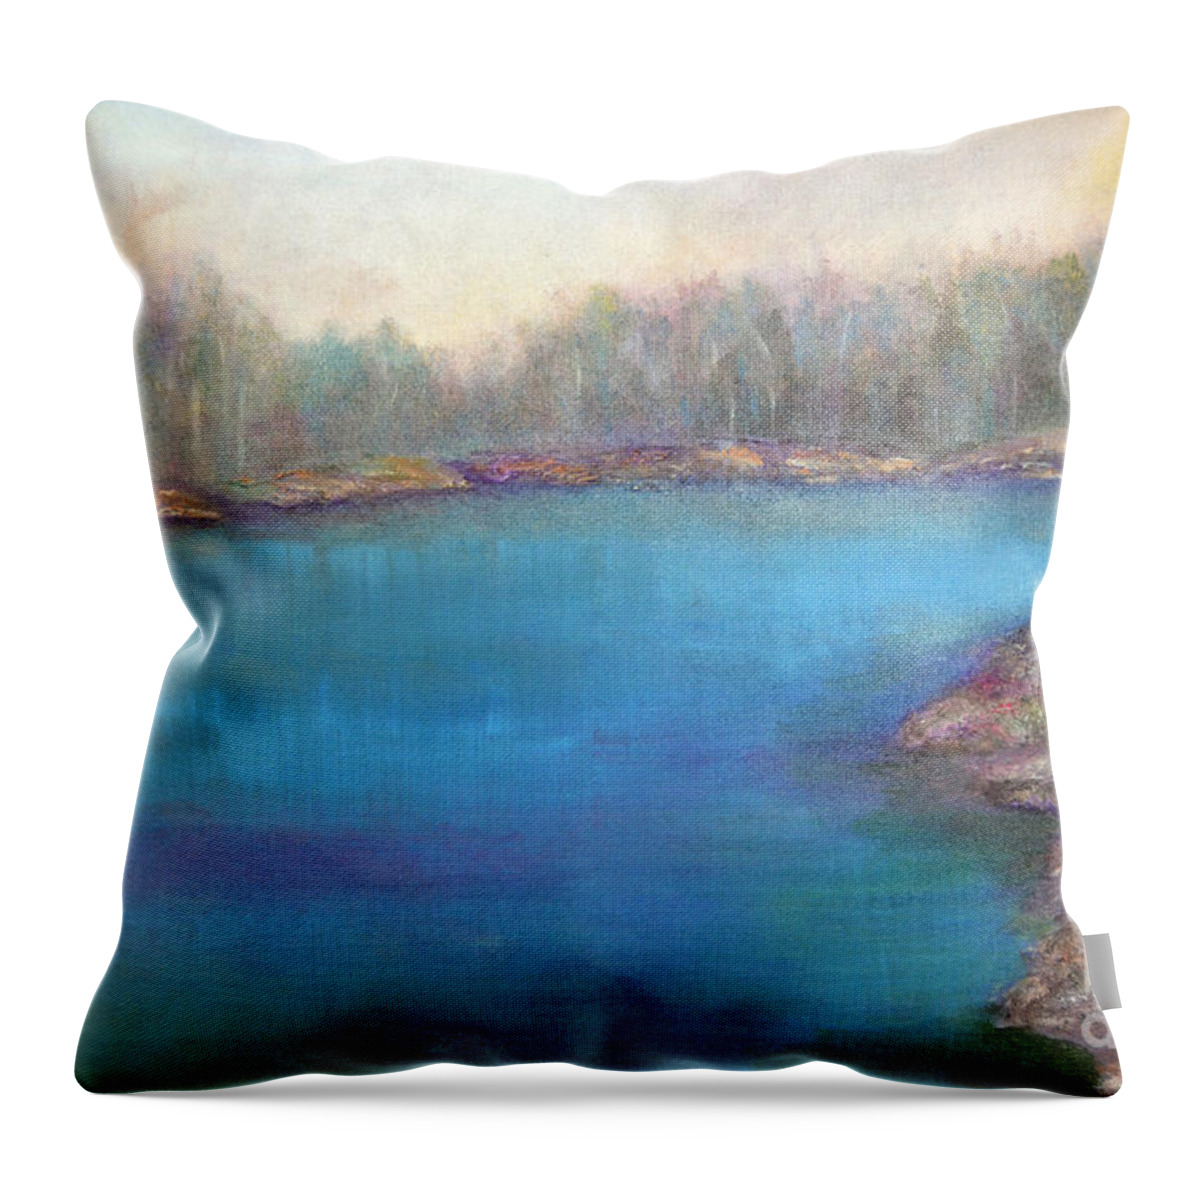 Muskoka Throw Pillow featuring the painting Muskoka Shore by Claire Bull